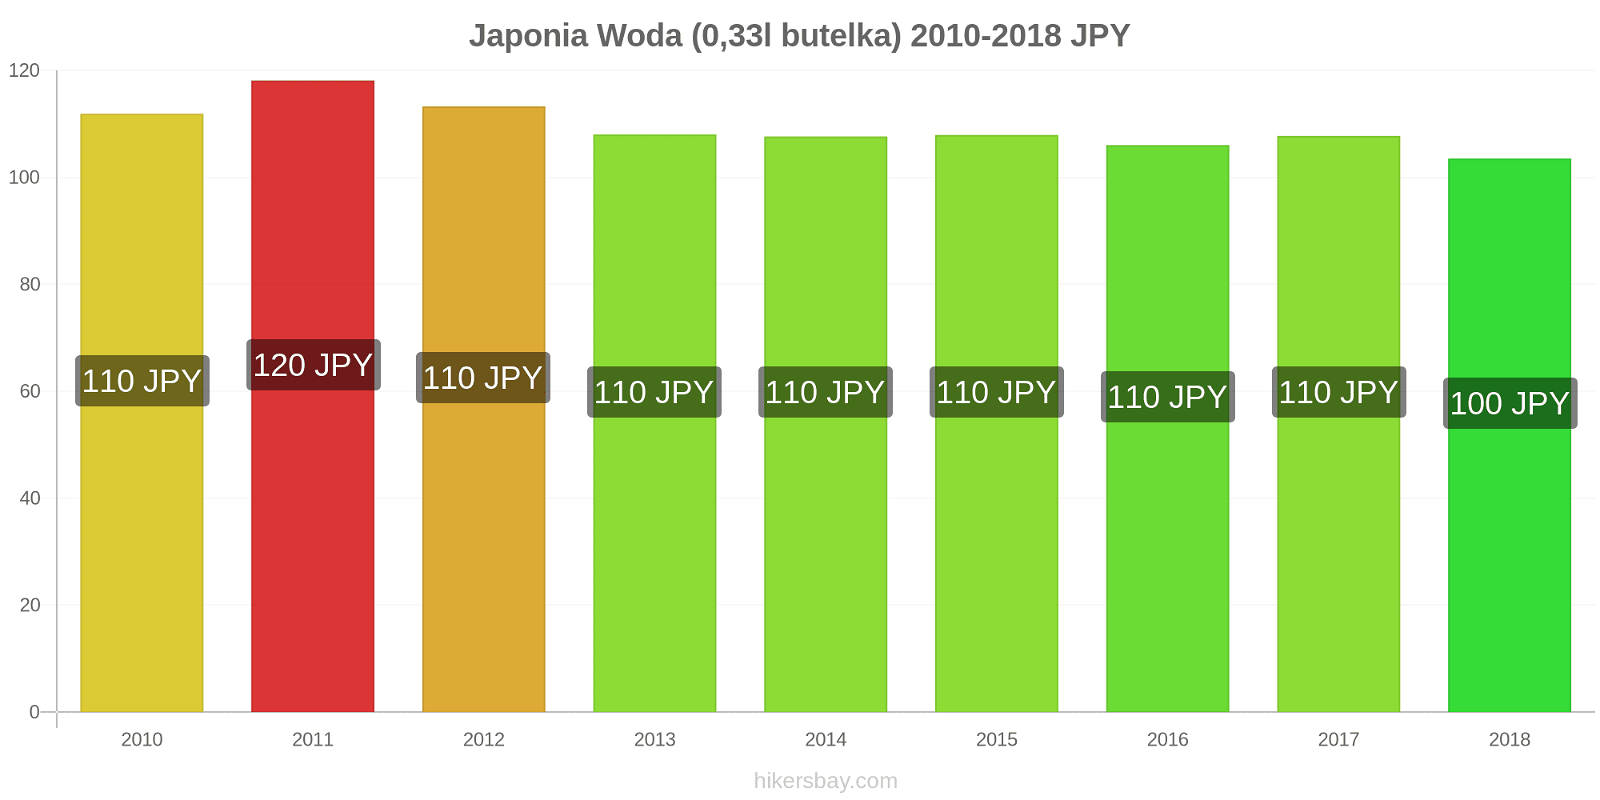 Japonia zmiany cen Woda (0,33l butelka) hikersbay.com